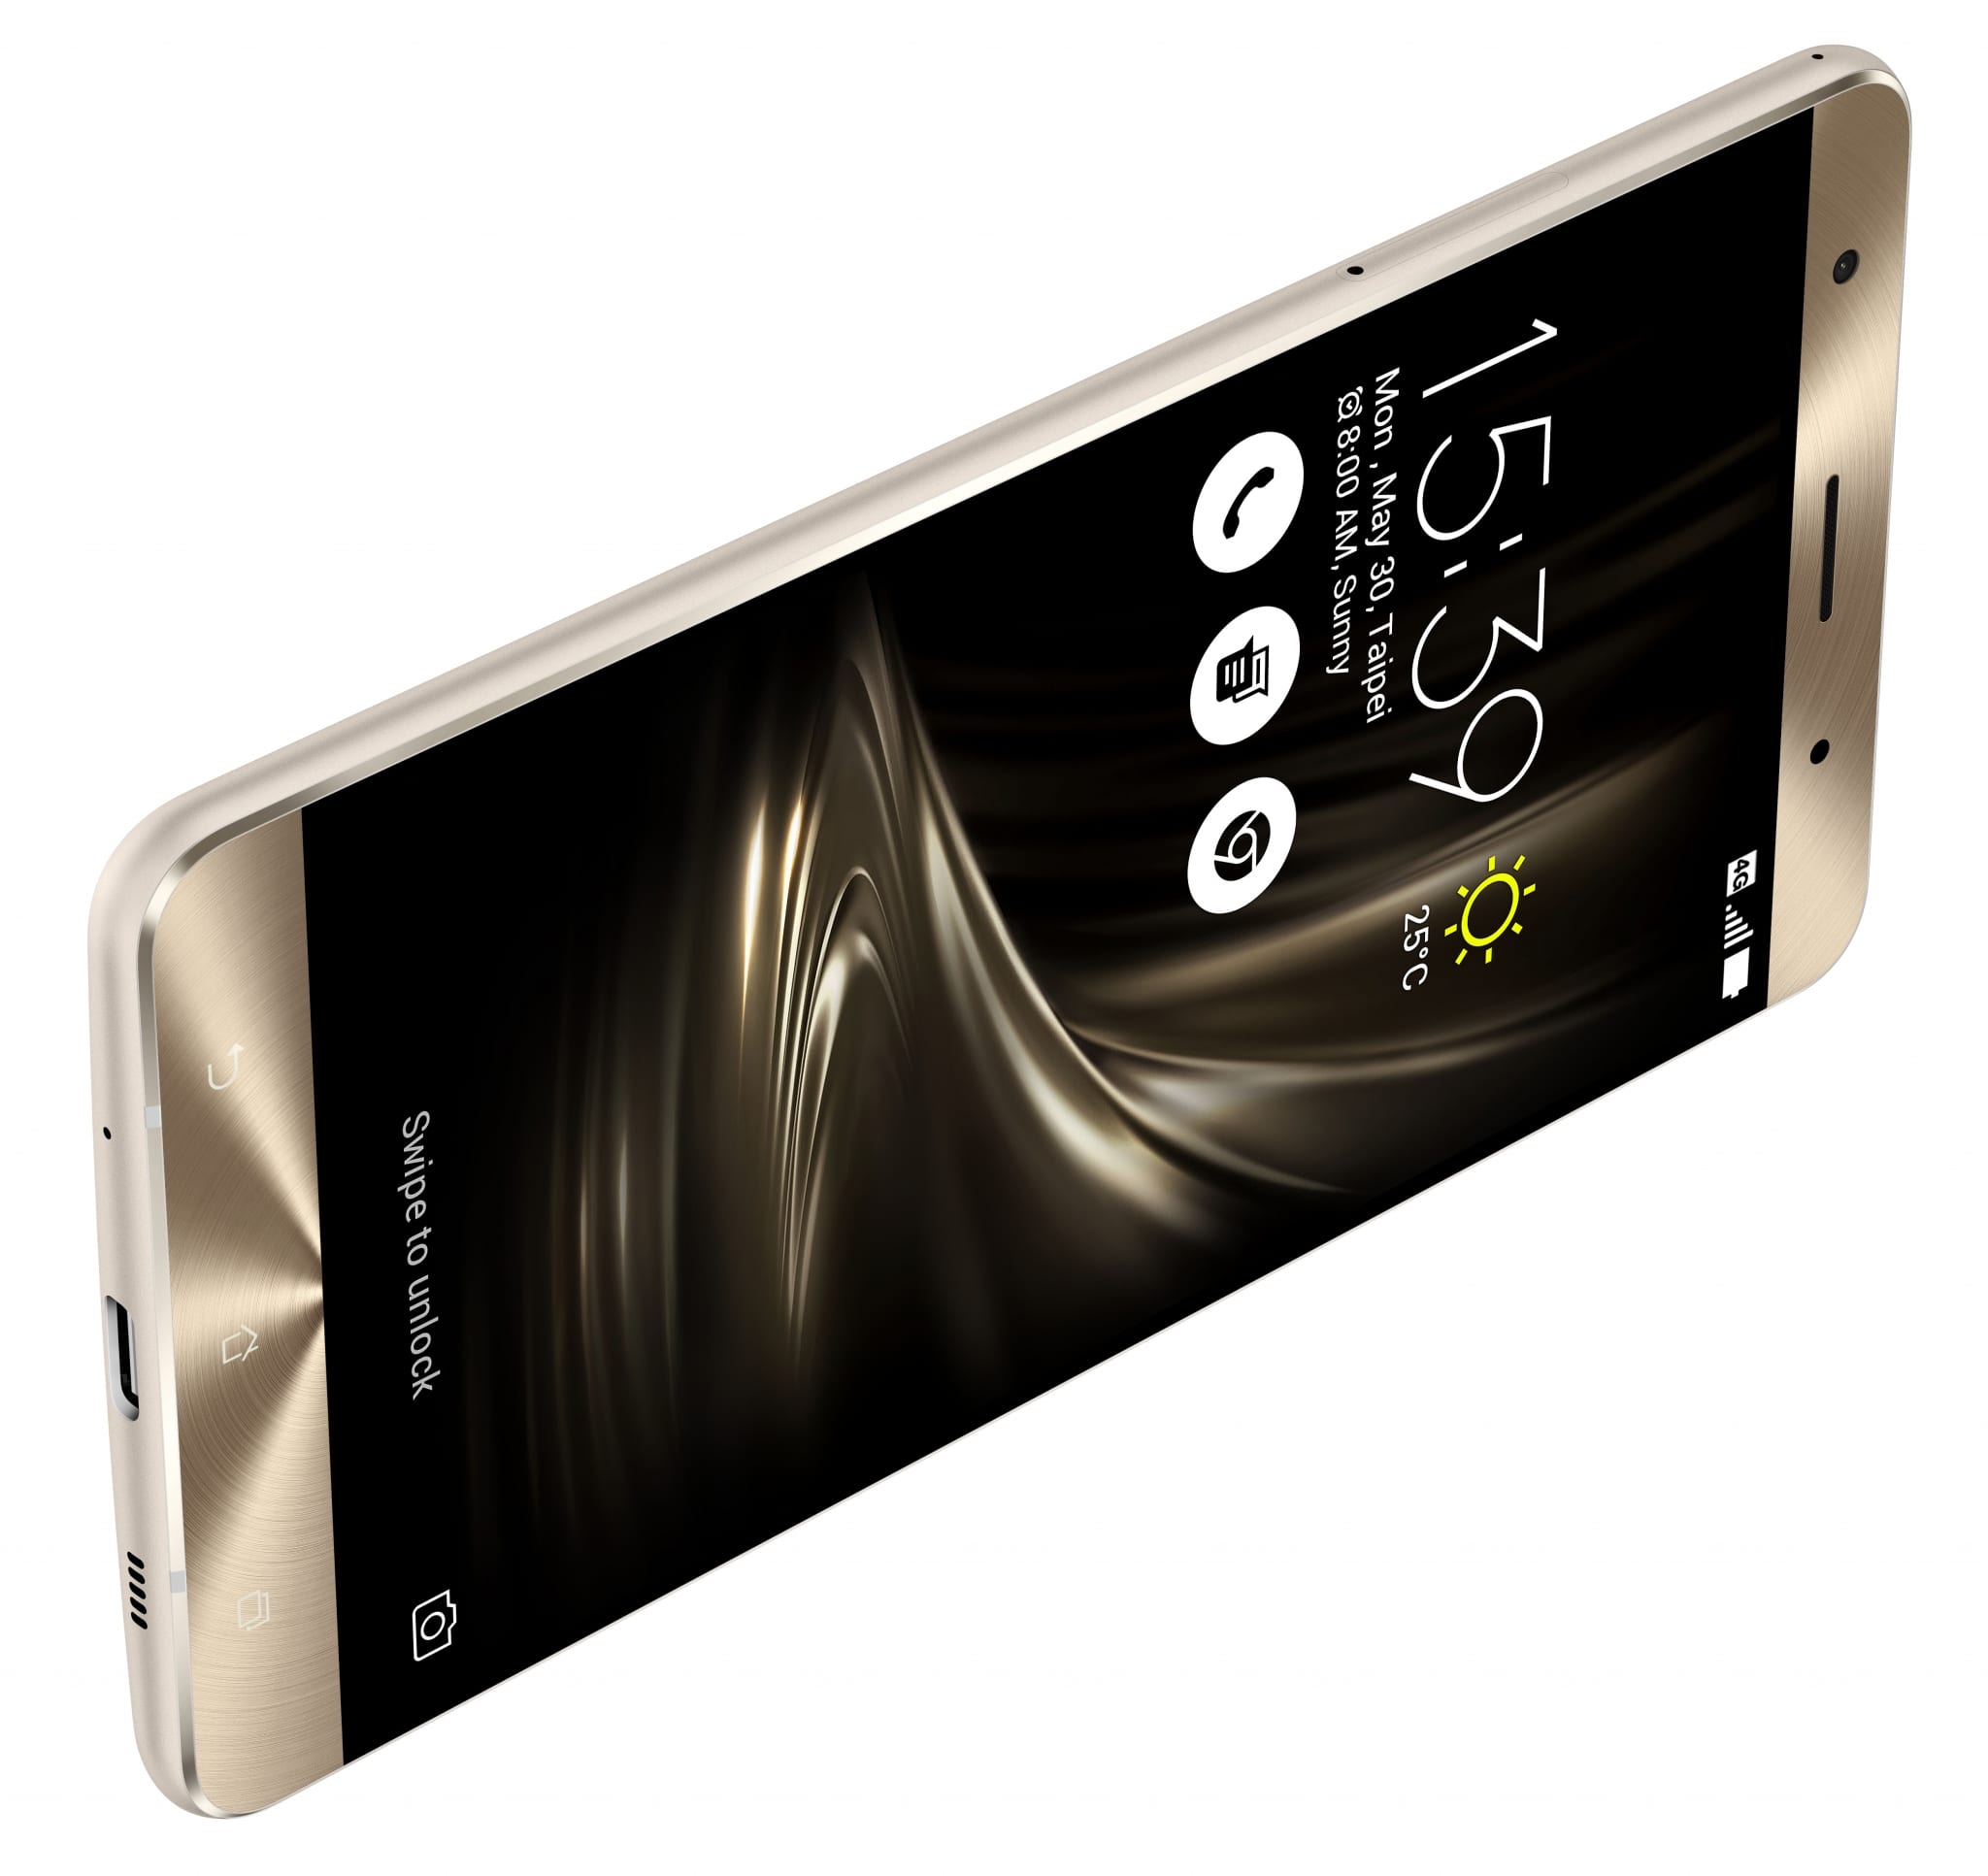 Smartphone ASUS ZenFone 3 Deluxe Dengan Teknologi PureMetal